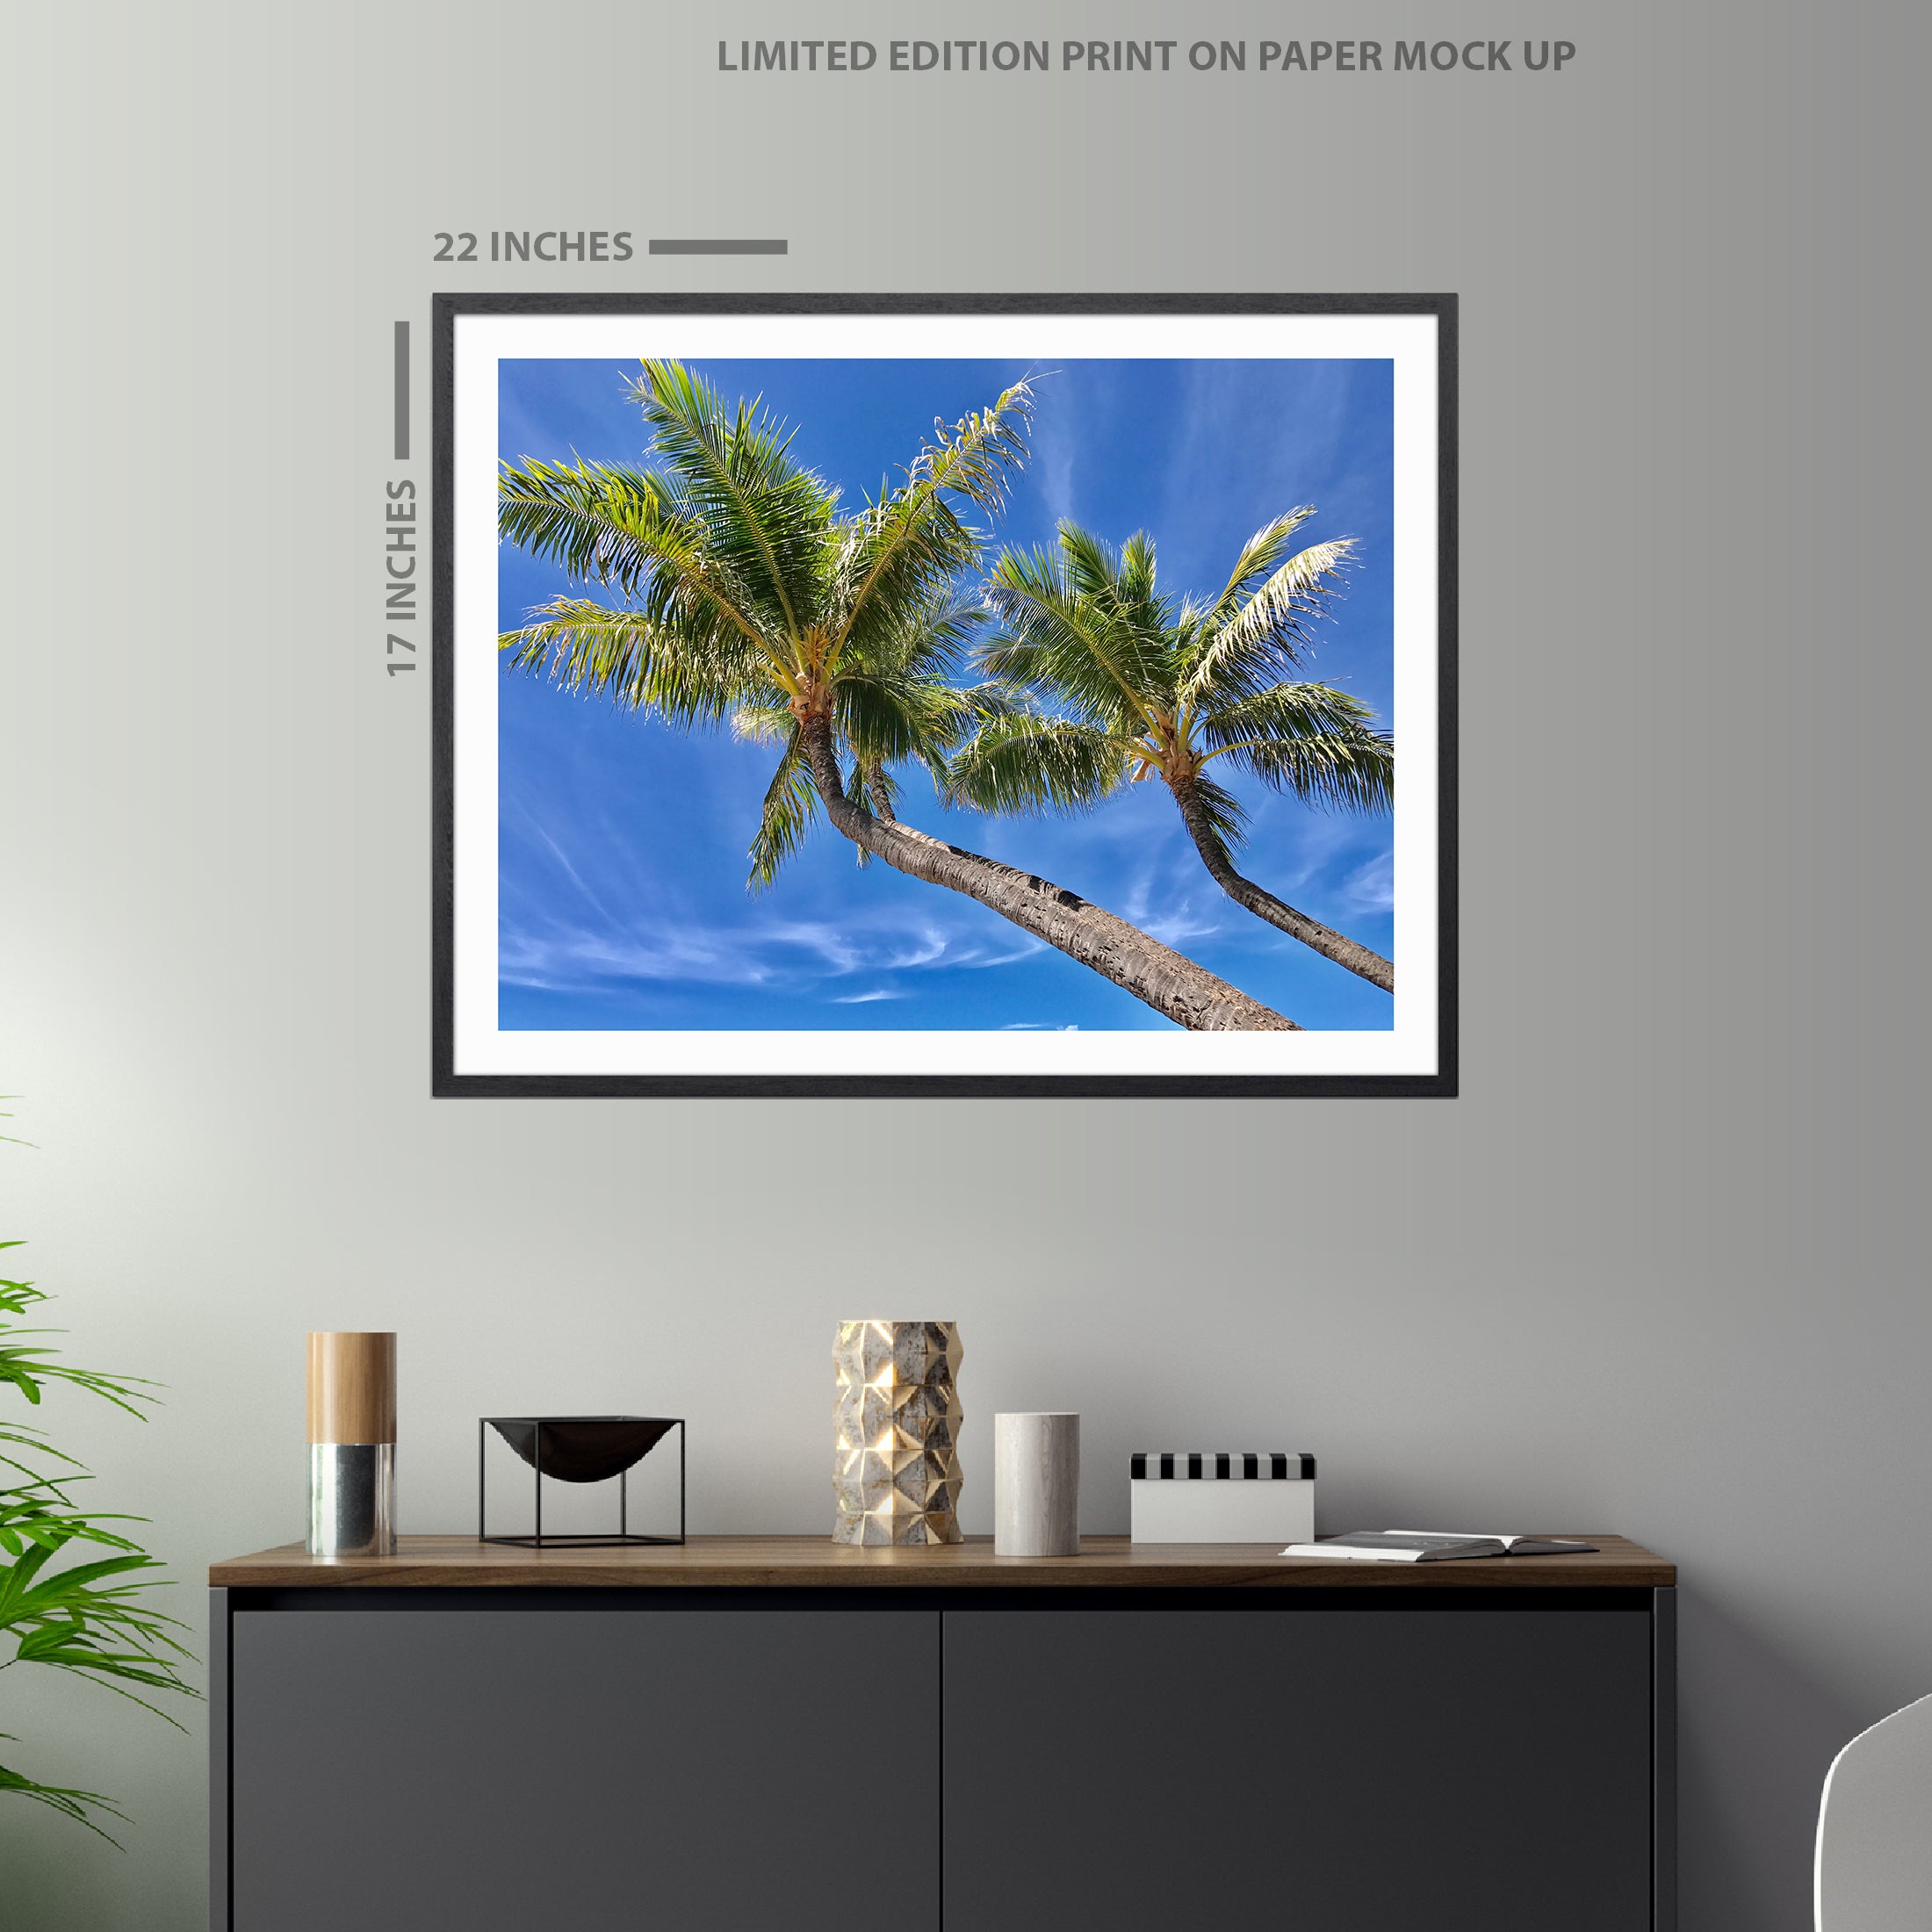 Maui Palms 1.0, Limited Edition Print